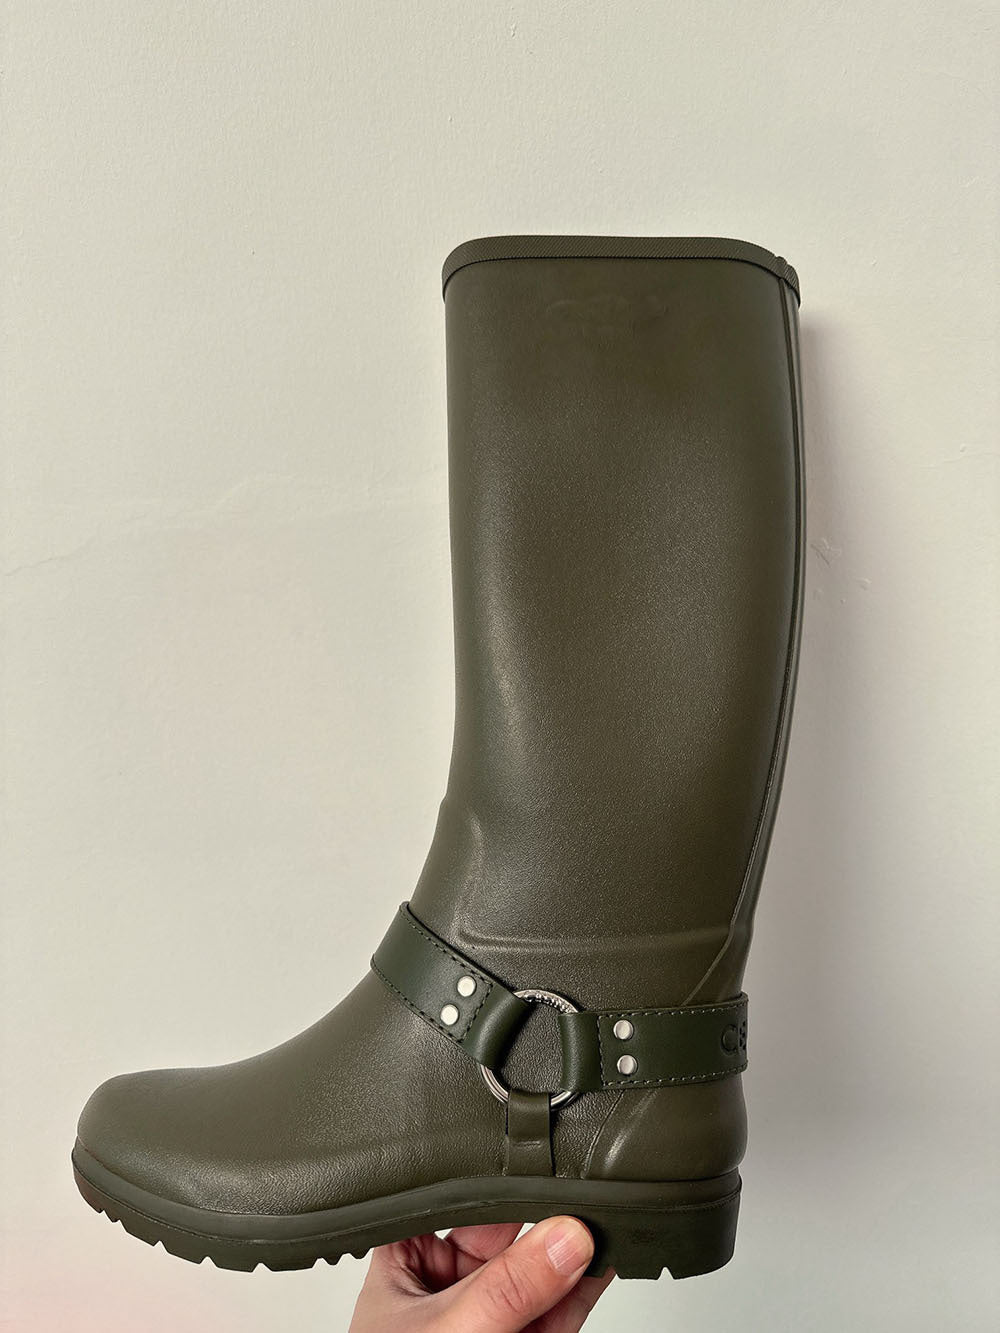 Below The Knee Buckle Knight Boots Waterproof